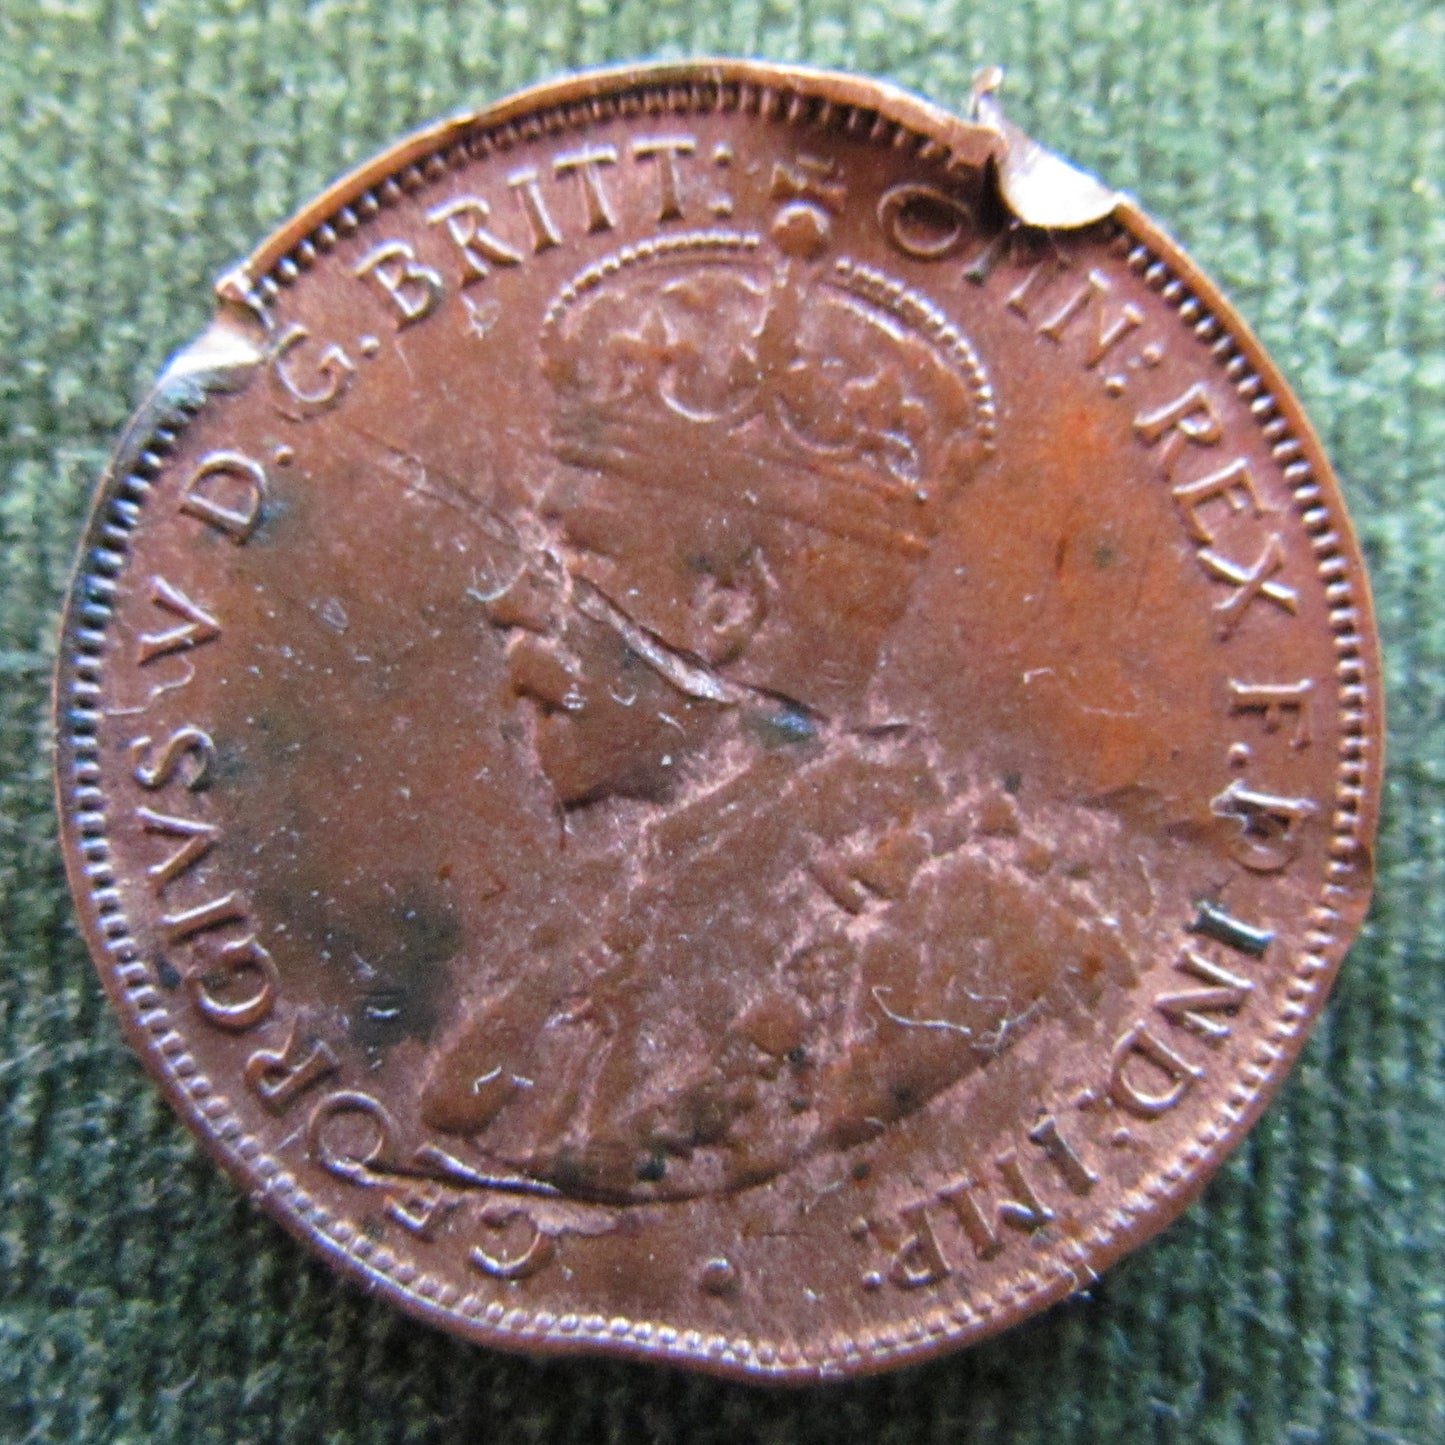 Australian 1933 1/2d Half Penny King George V Coin - Variety Rim Hit & Bent